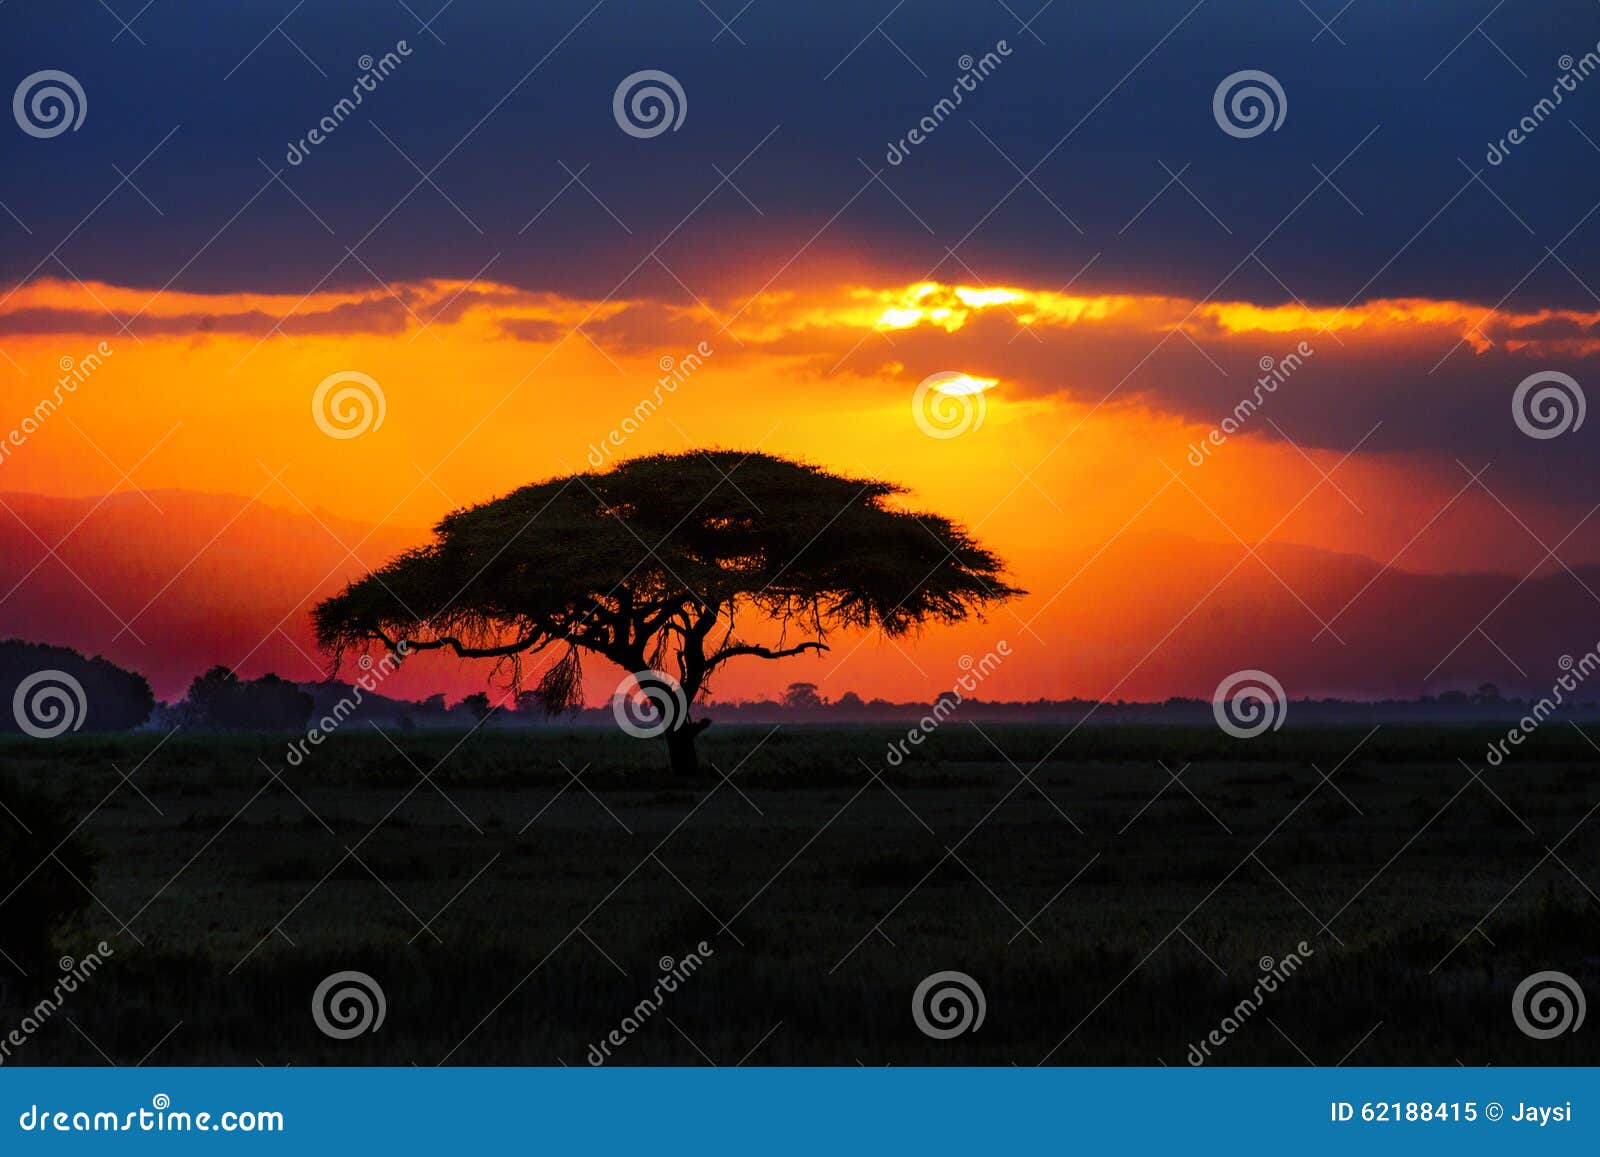 african tree silhouette on sunset in savannah, africa, kenya